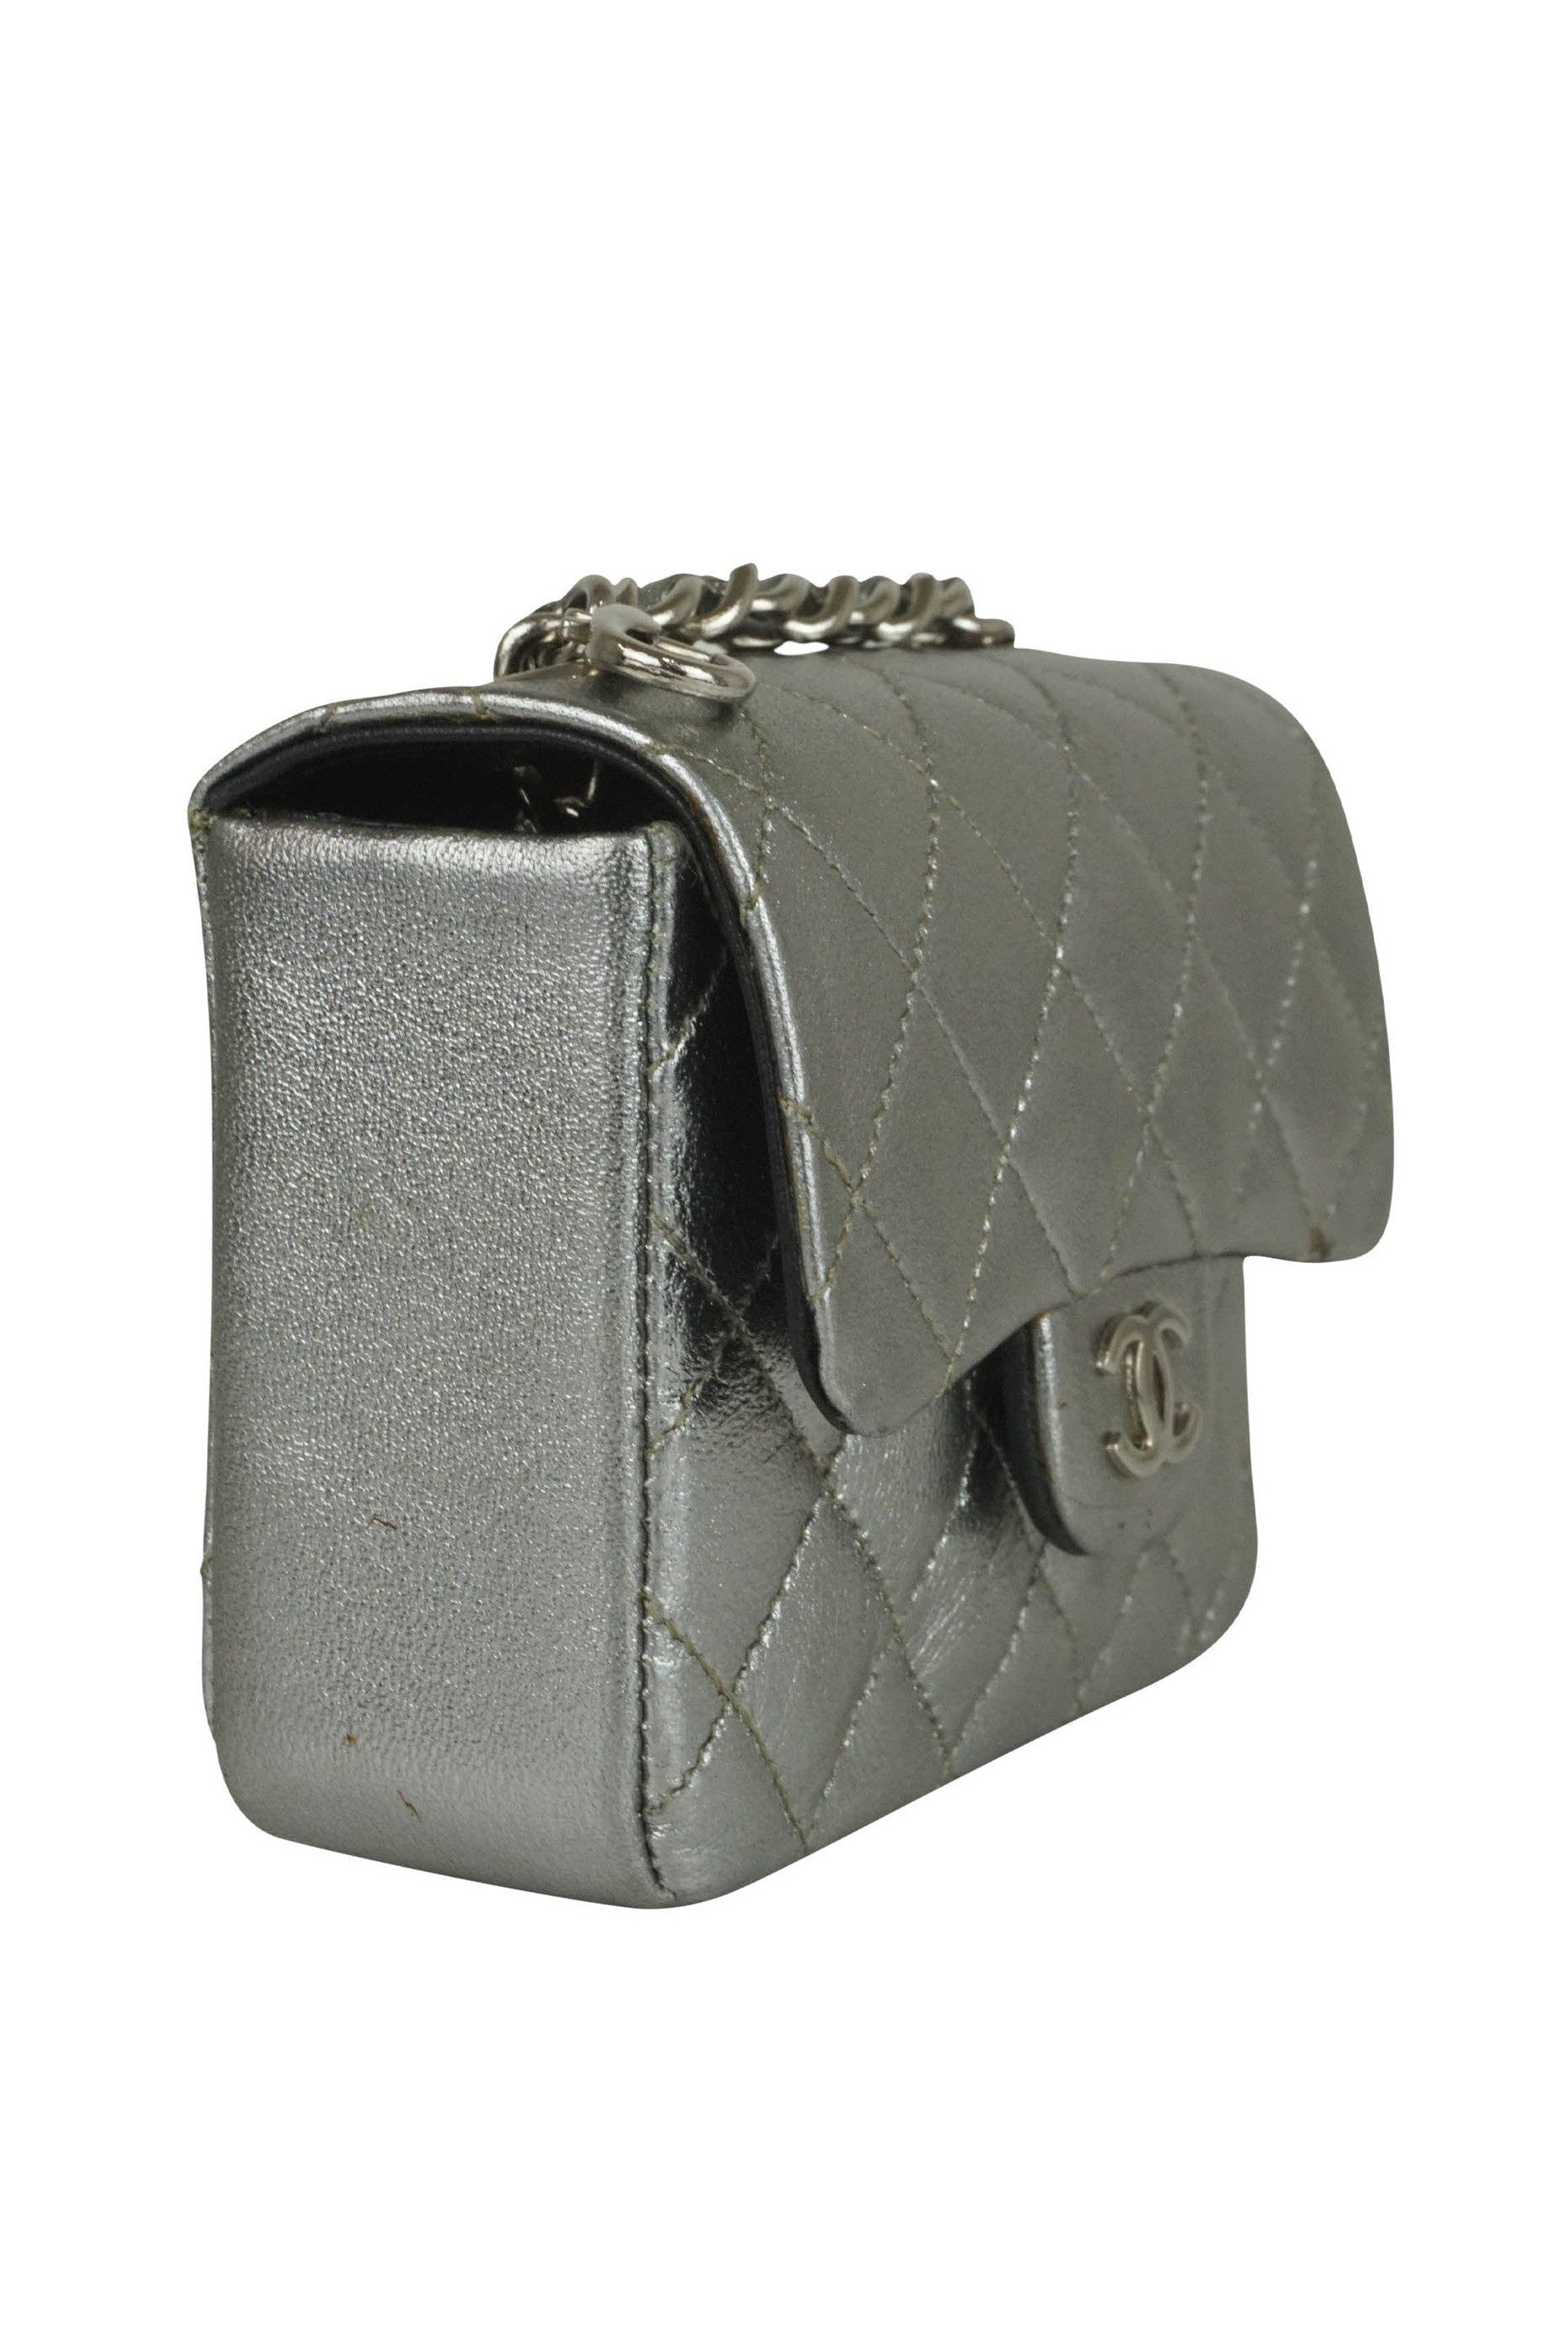 Chanel Rare Vintage Micro Mini Charm Bag 1997-1999